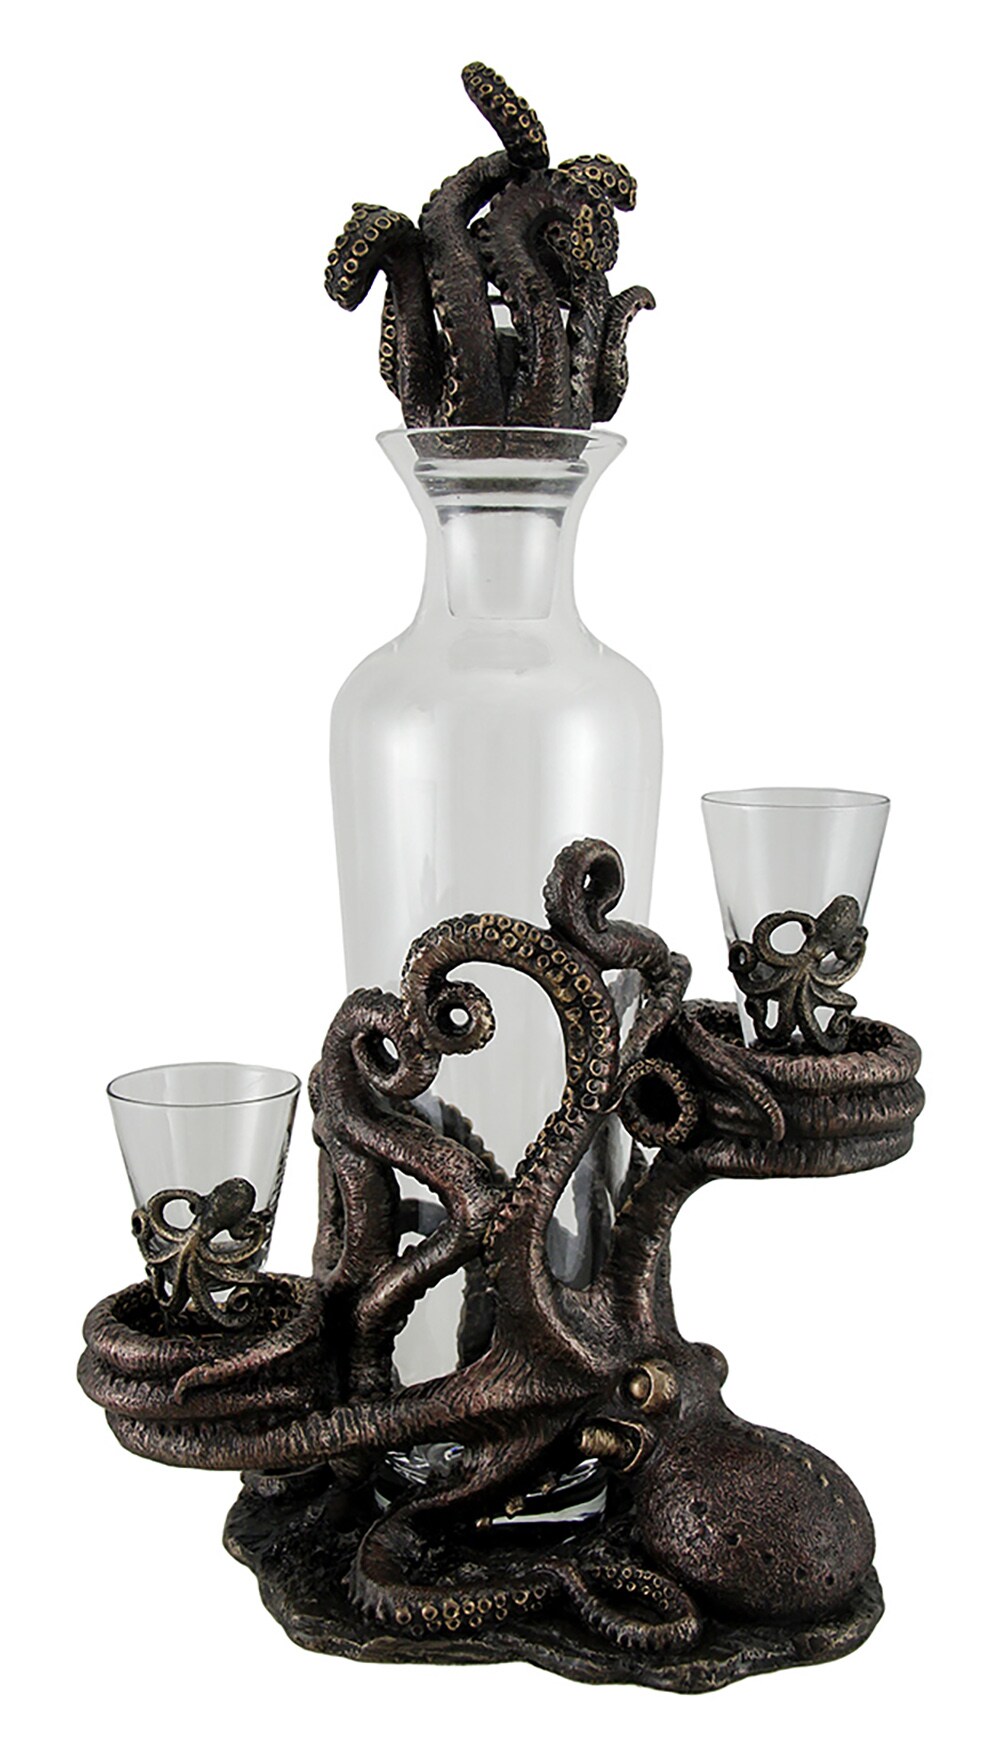 Octopus Spirit Decorative Antique Bronze Finish Statue and Glass Decanter Set